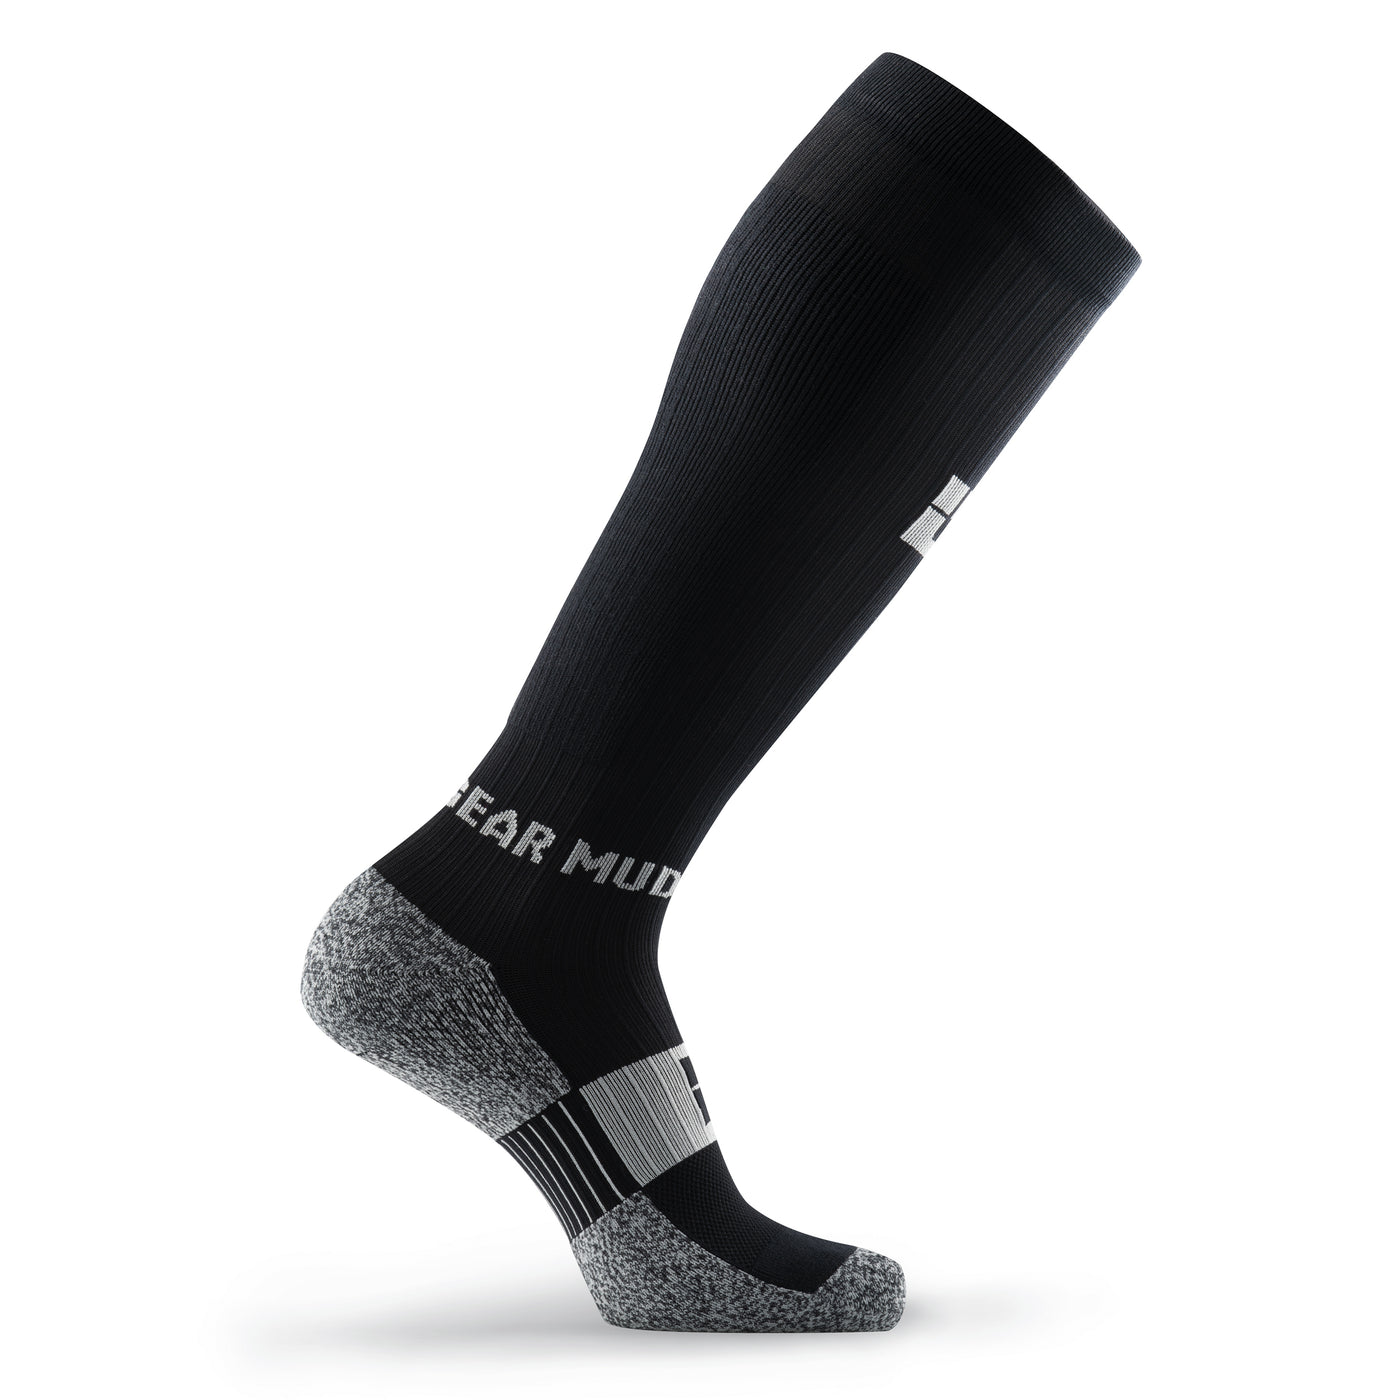 sports compression socks by Mudgear